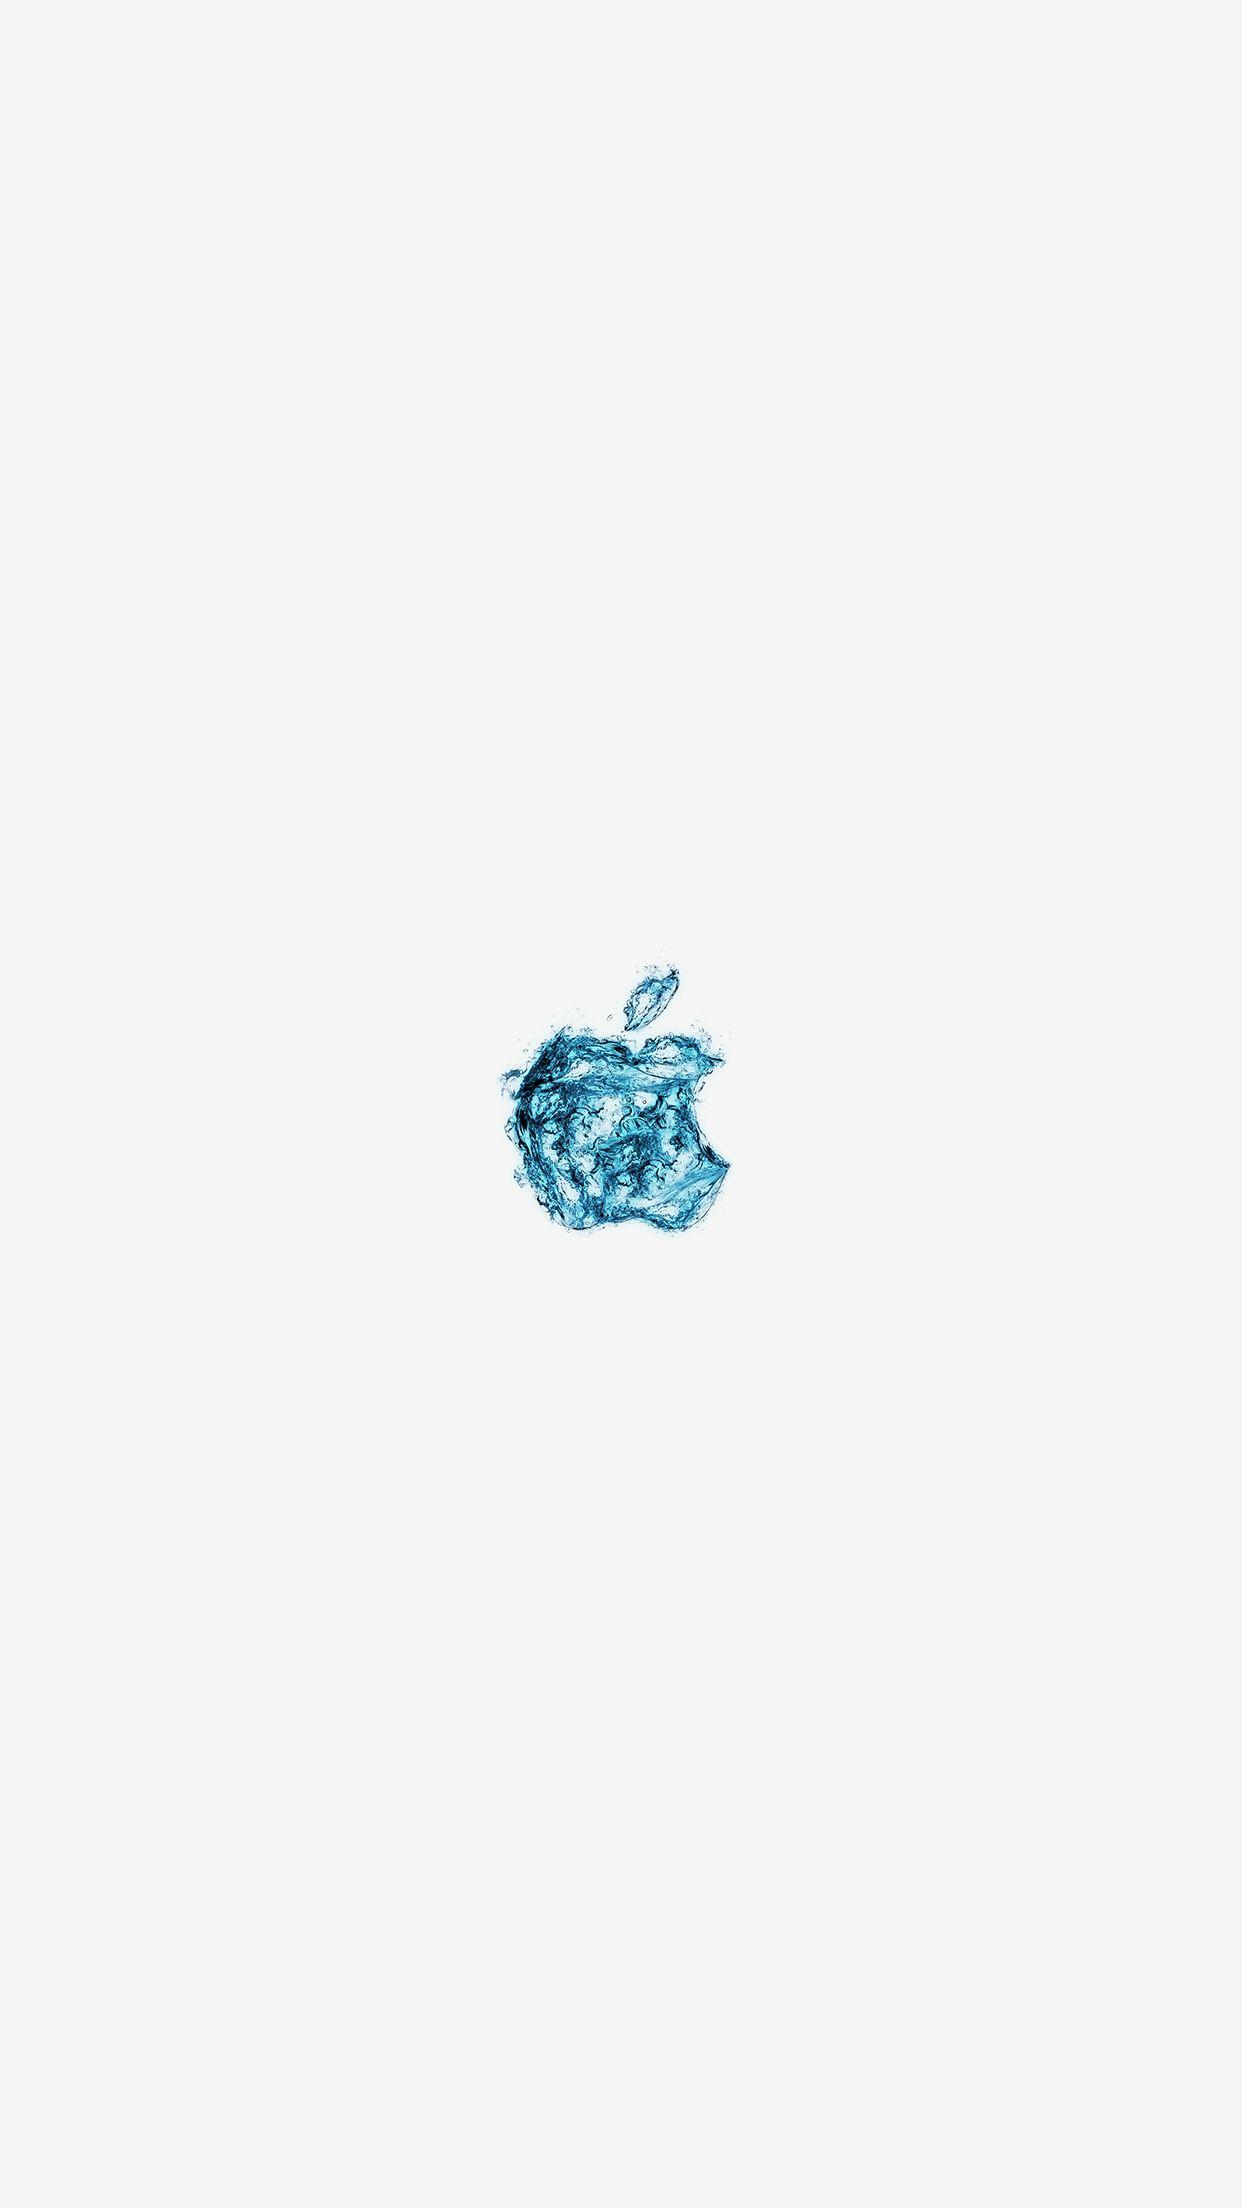 Blue Apple Logo - iPhone7 wallpaper. apple logo water white